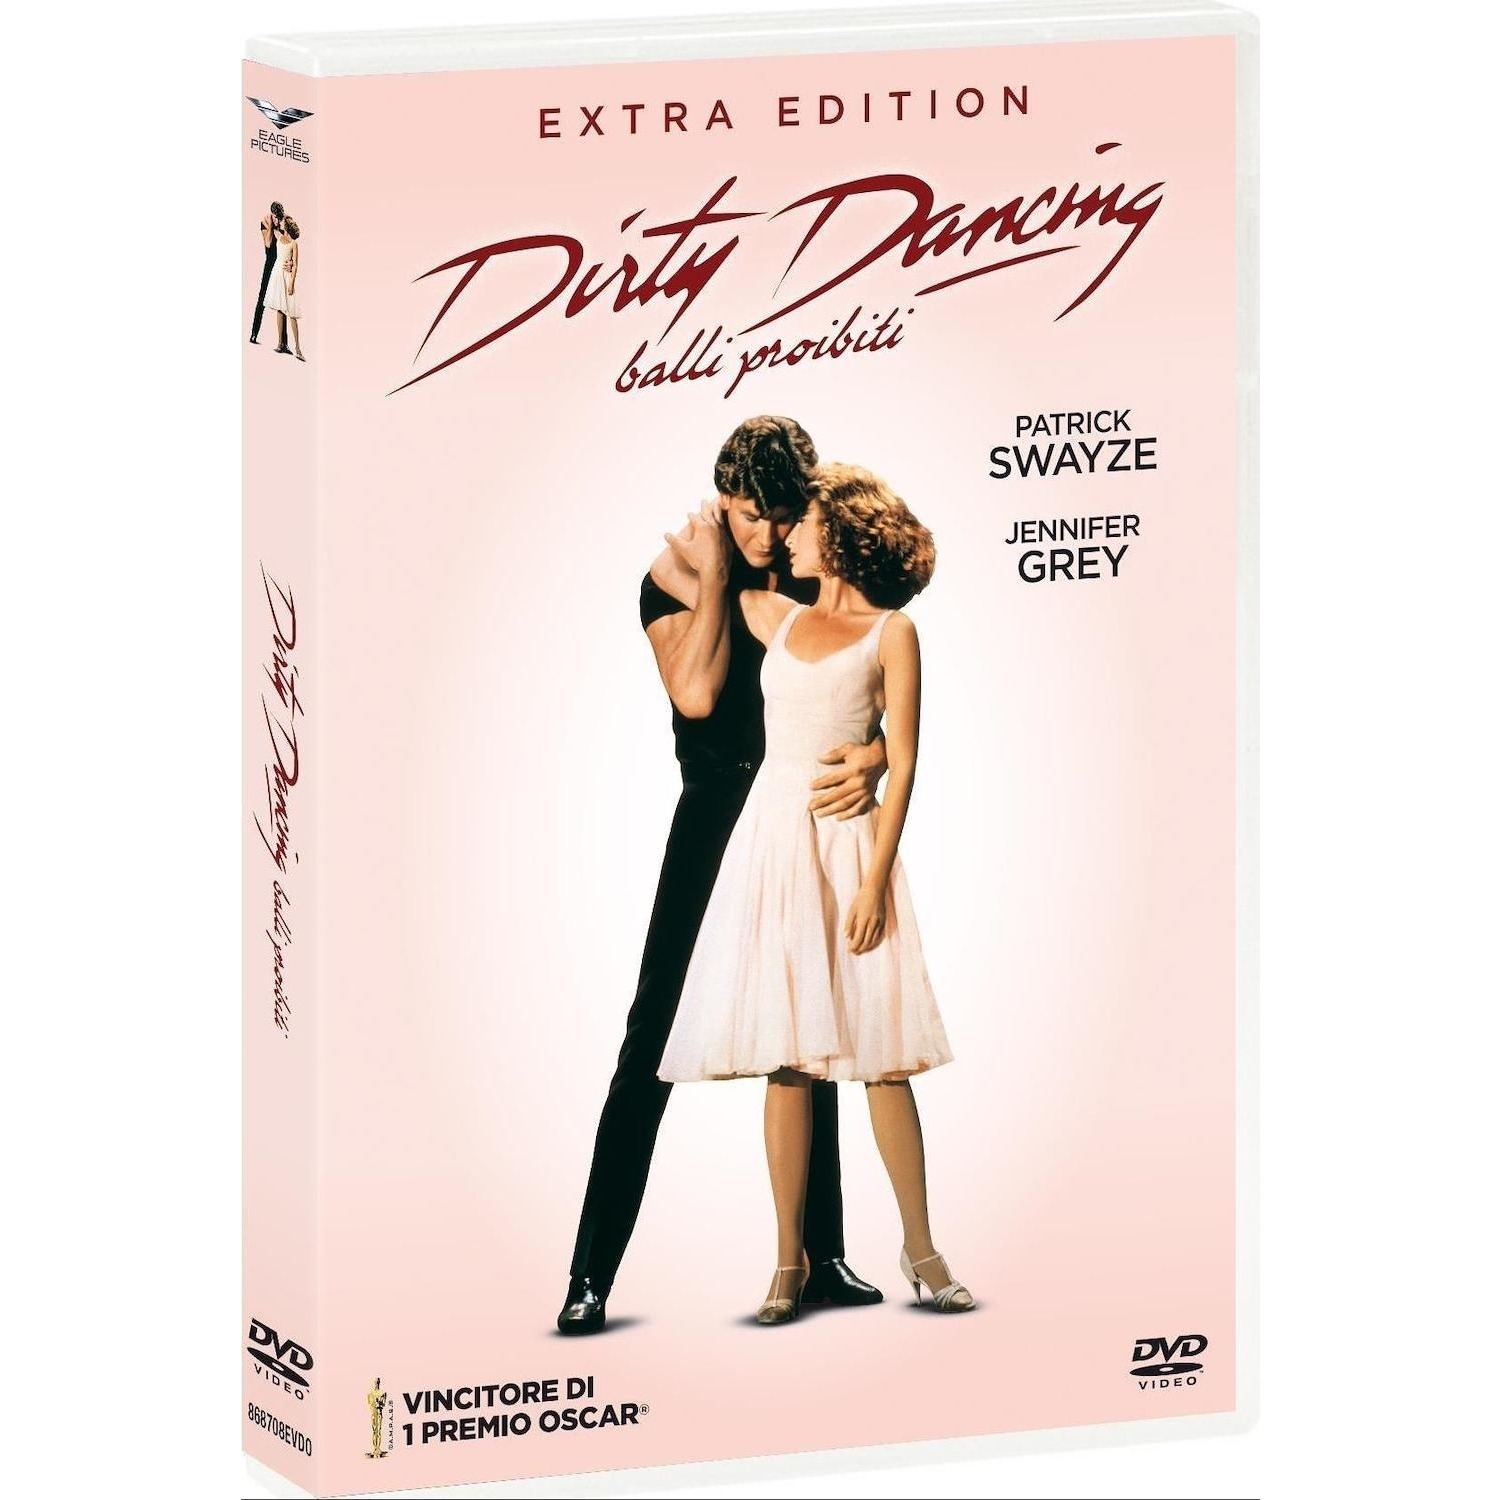 Immagine per DVD Dirty Dancing  New Extra Edition da DIMOStore